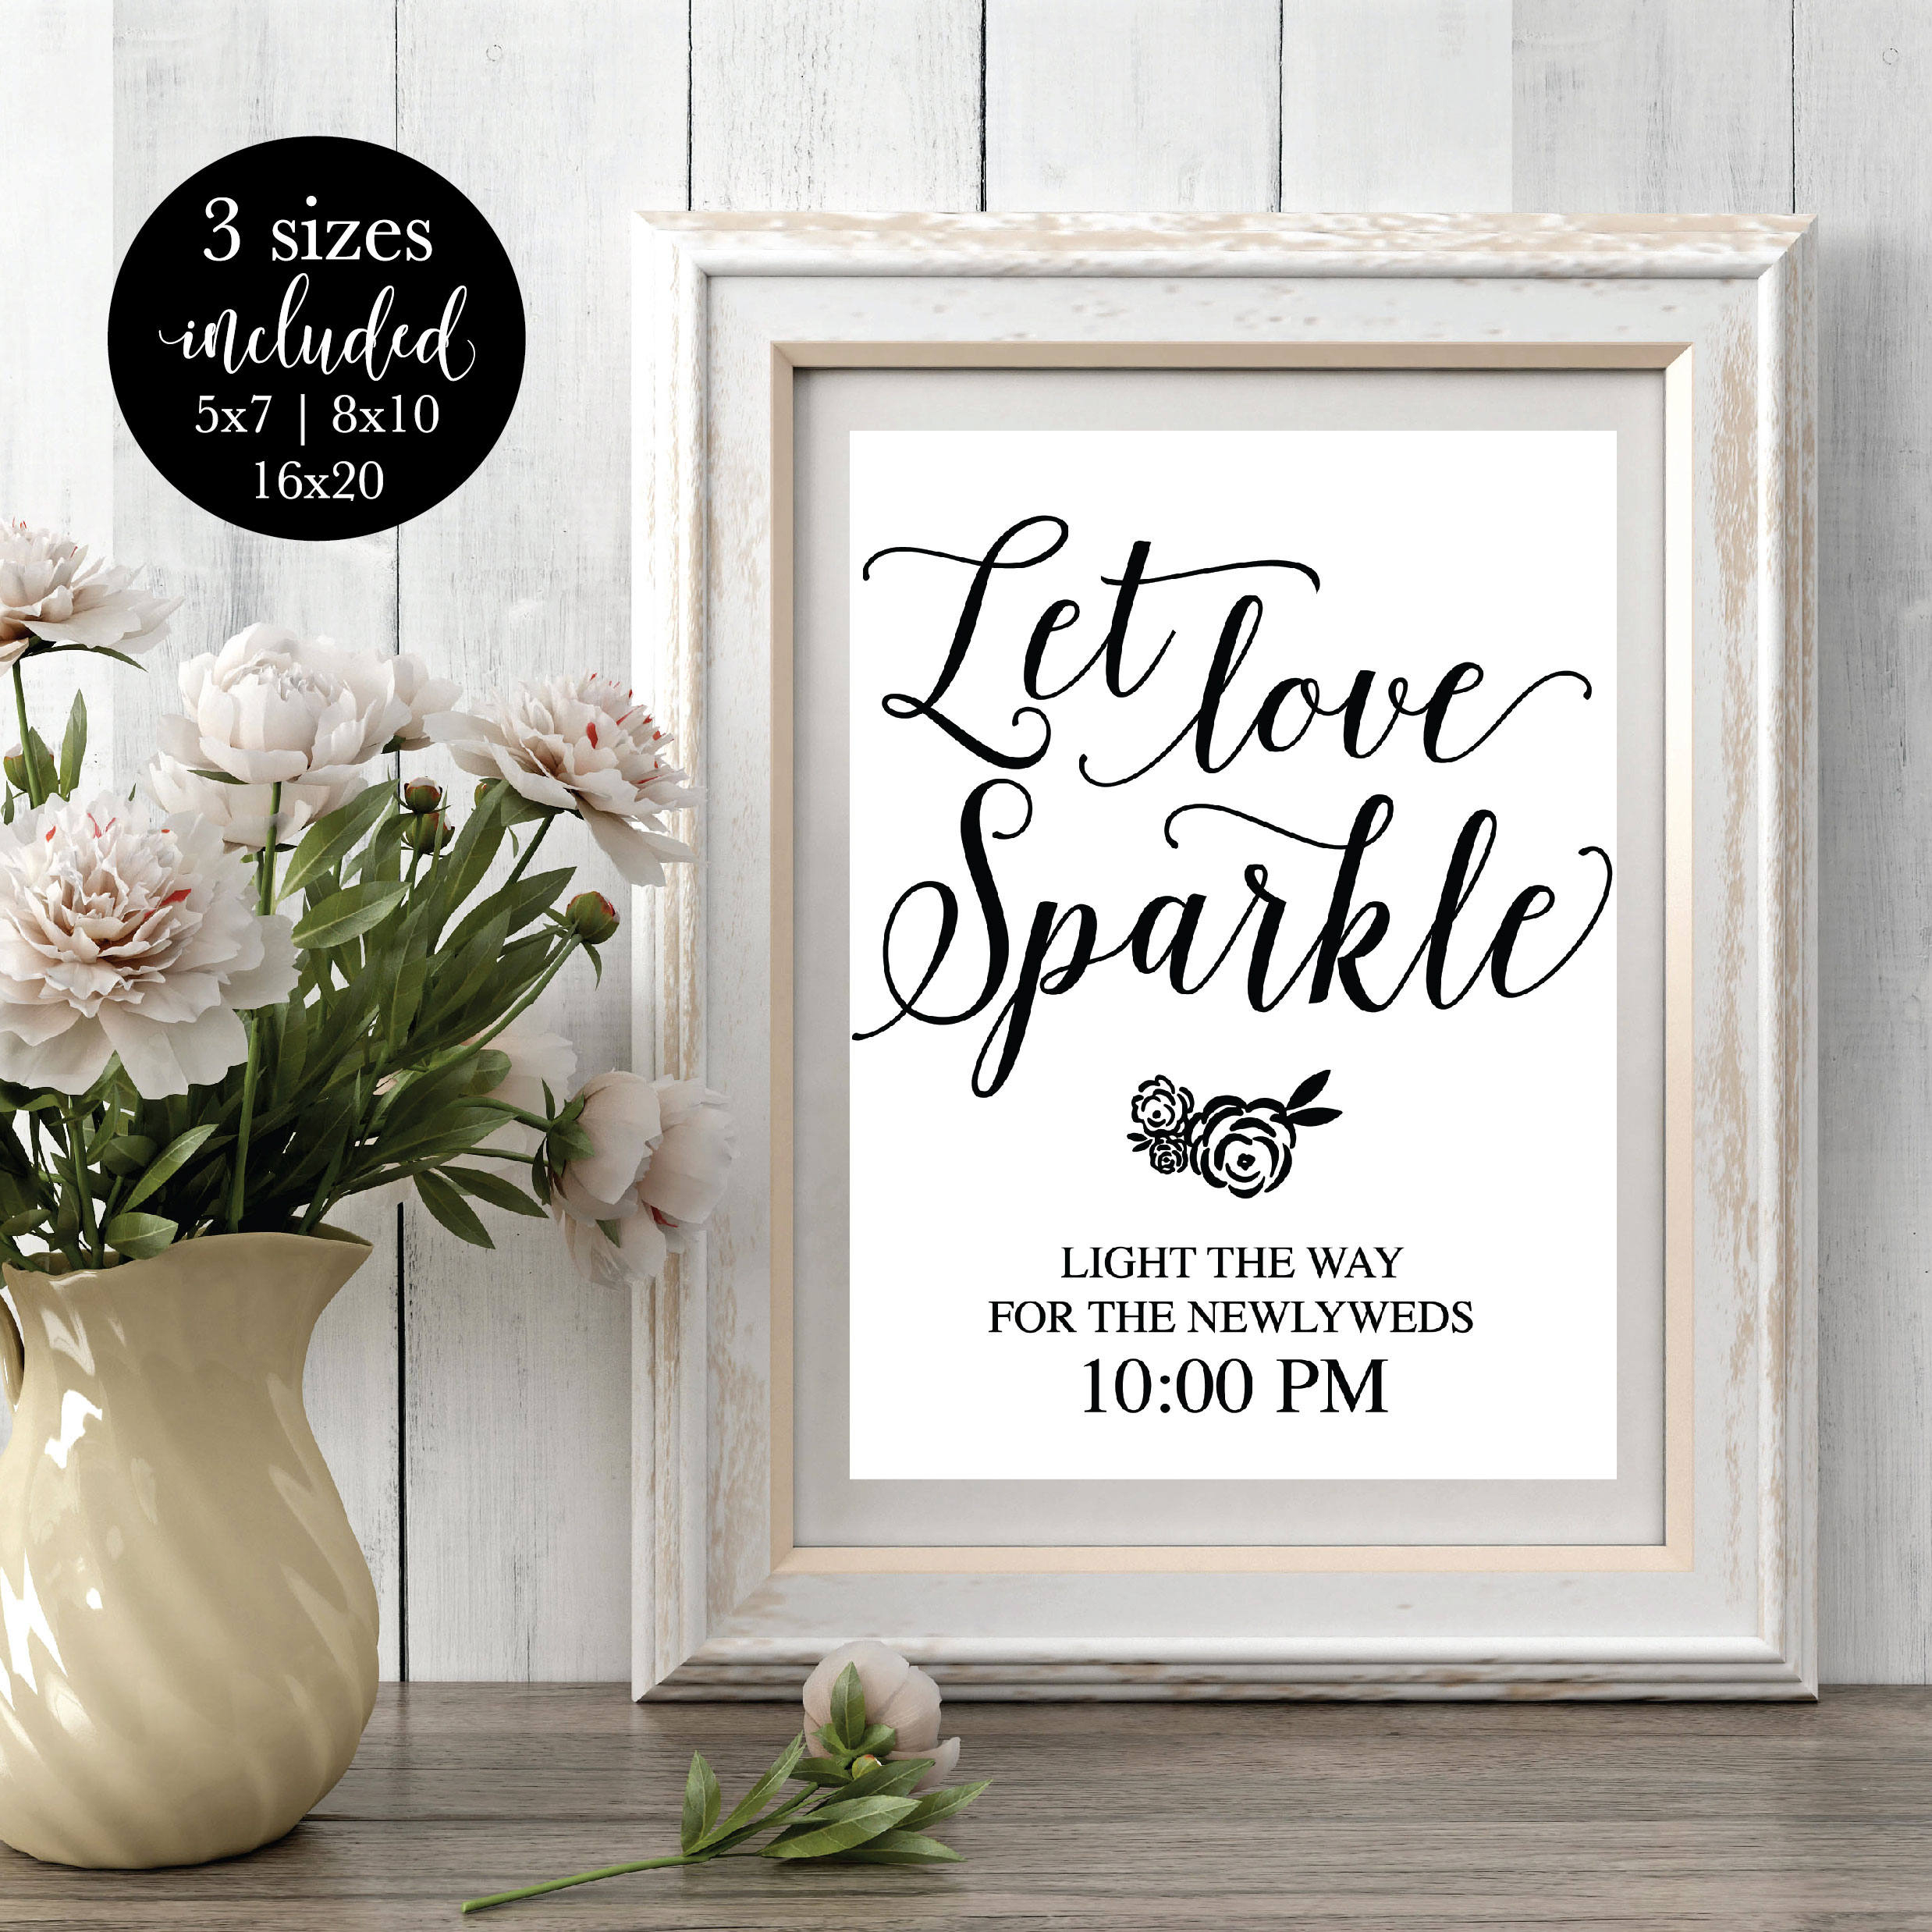 Printable Wedding Sparkler Sign Editable Reception Let Love | Etsy - Free Printable Wedding Sparkler Sign